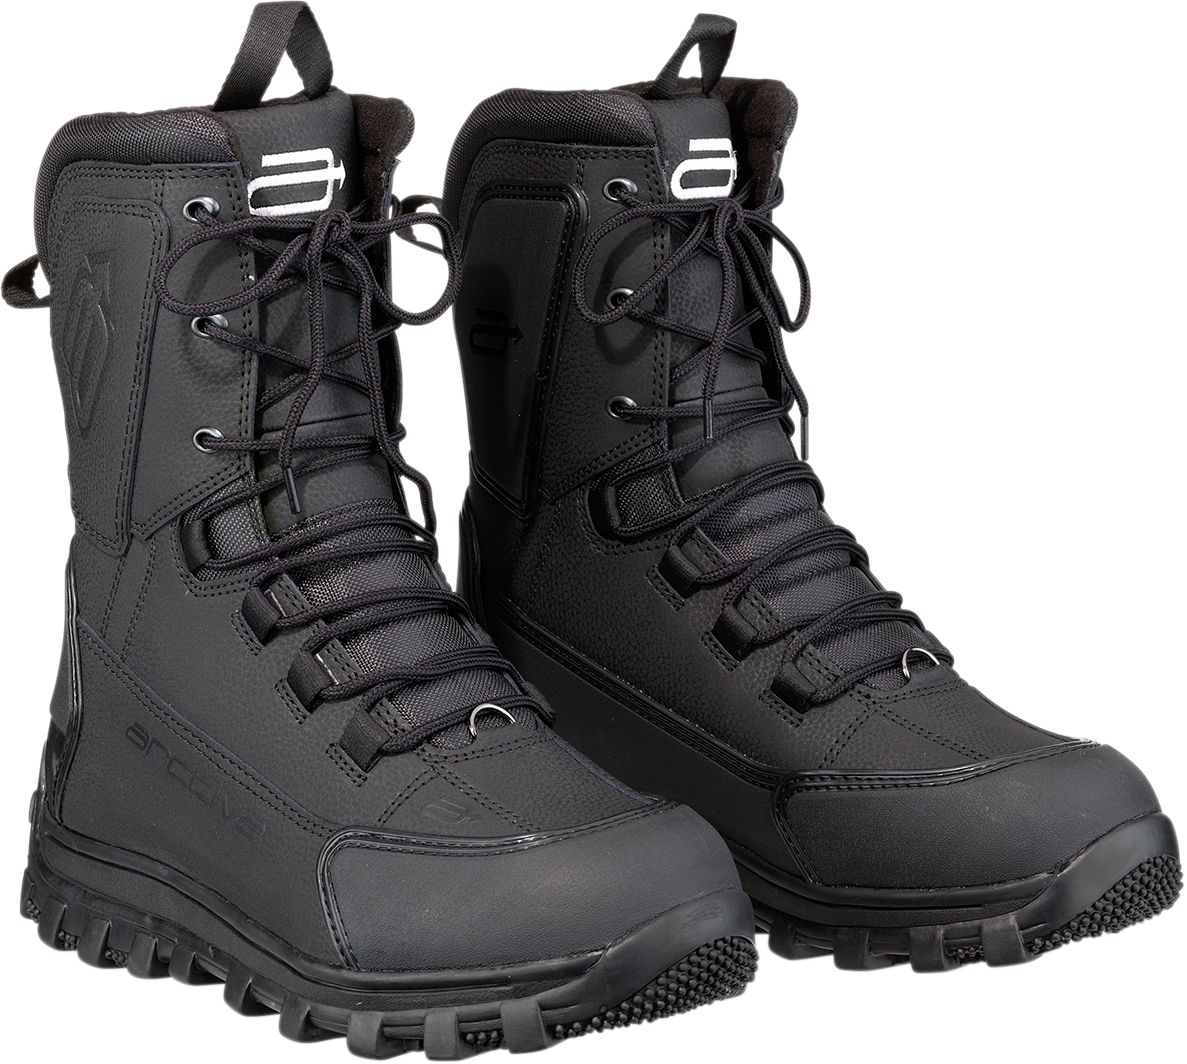 ARCTIVA Advance Boots - Black - Size 12 3420-0645